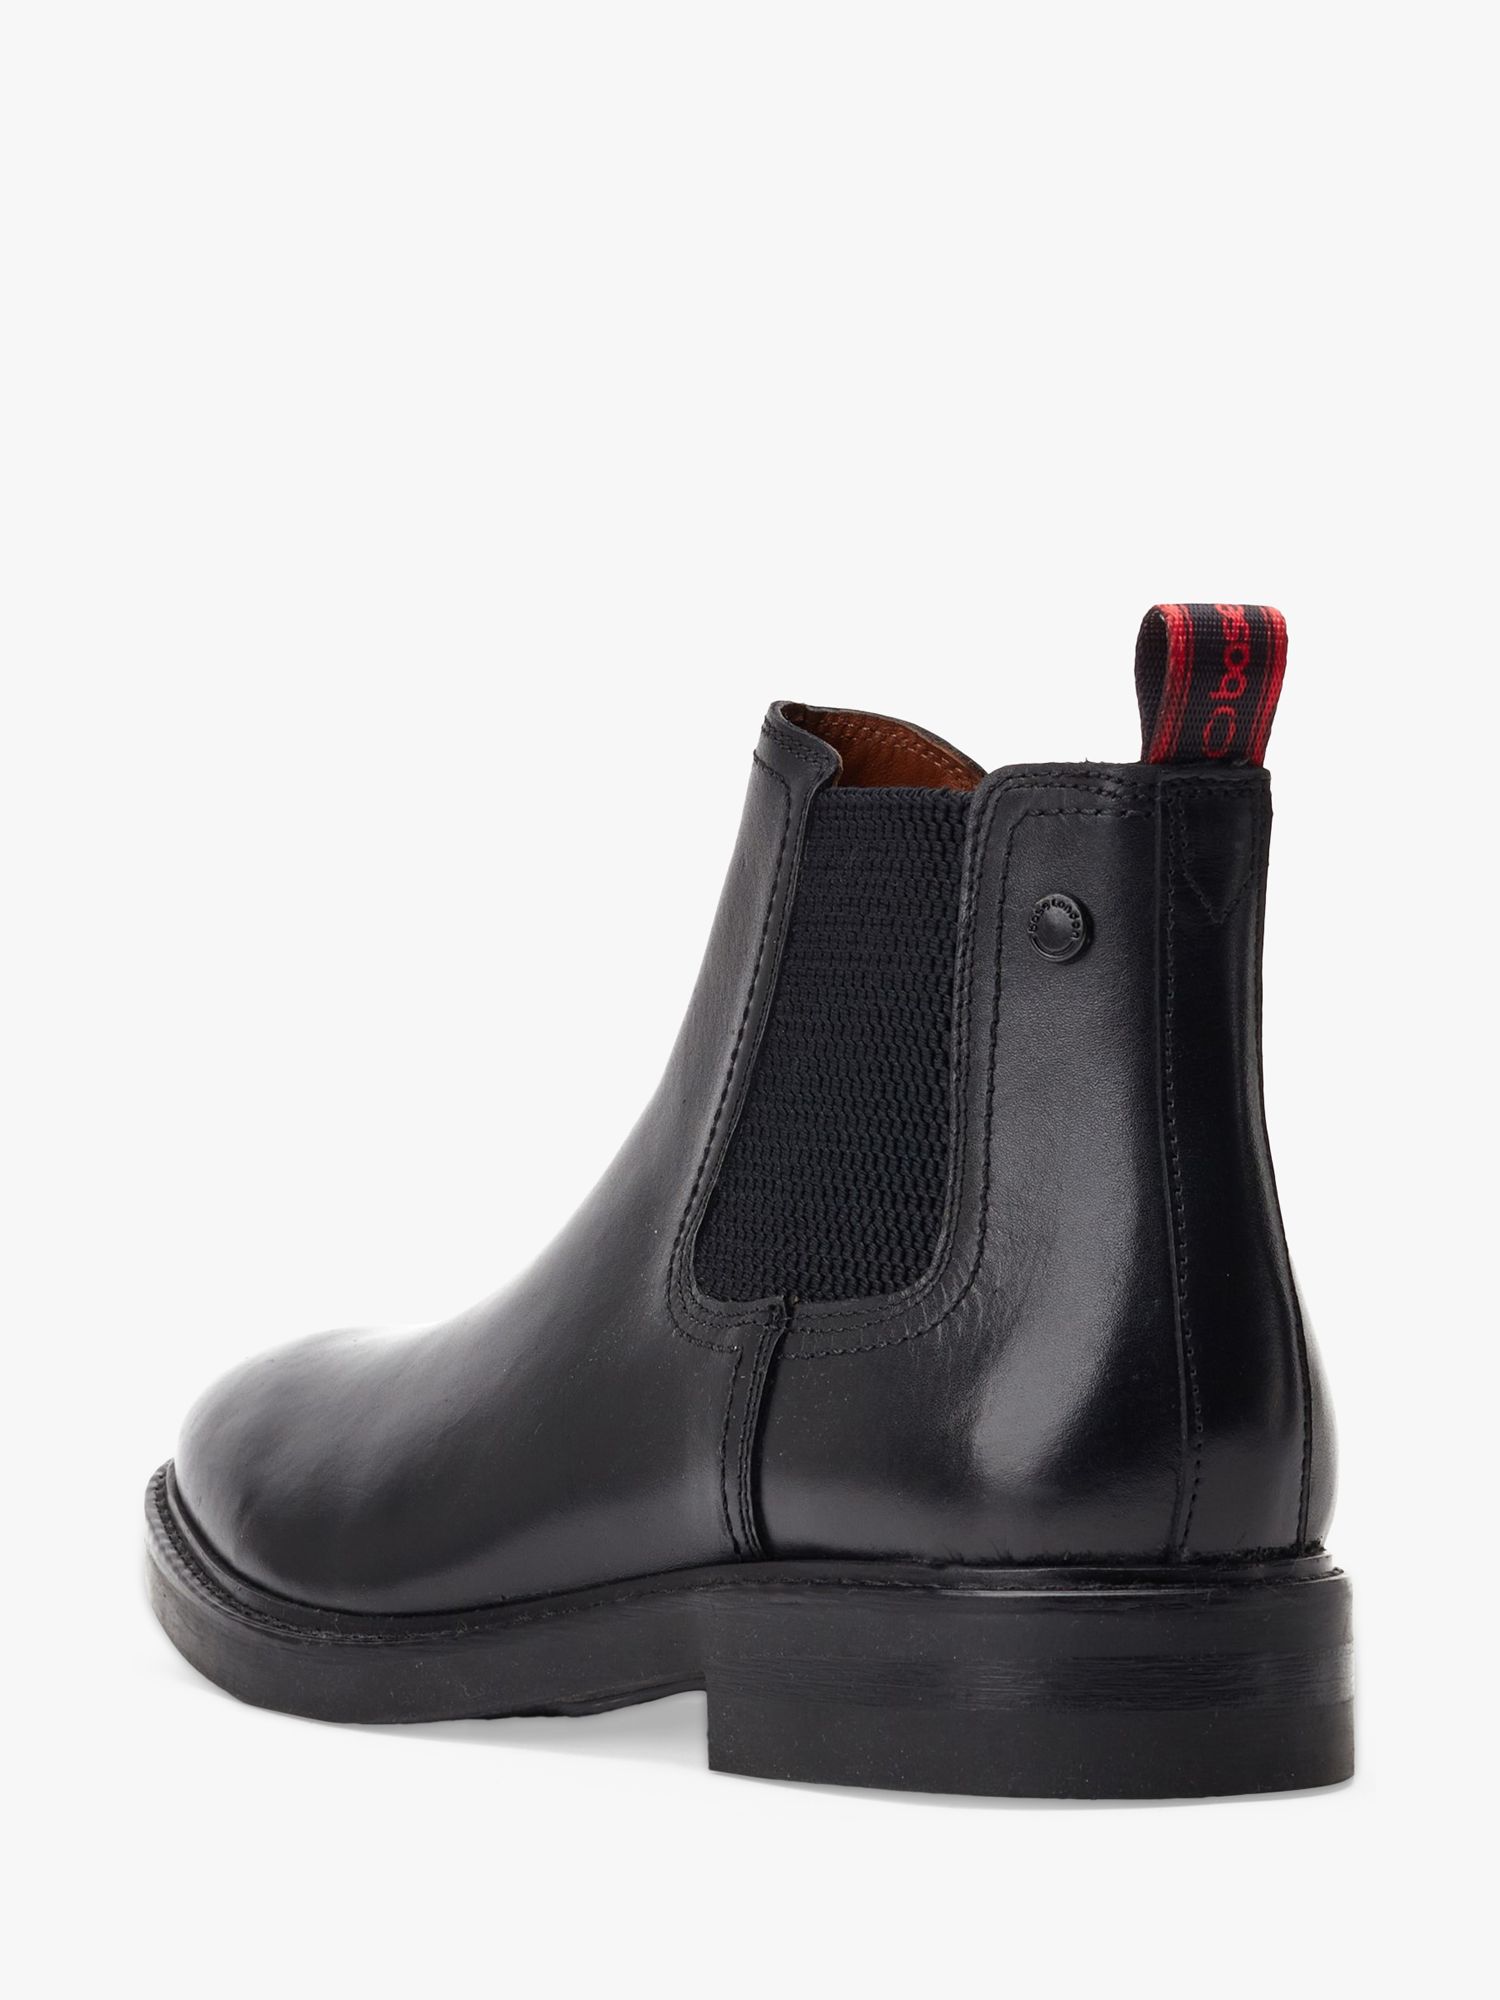 Base London Portland Leather Chelsea Boots, Black, 7